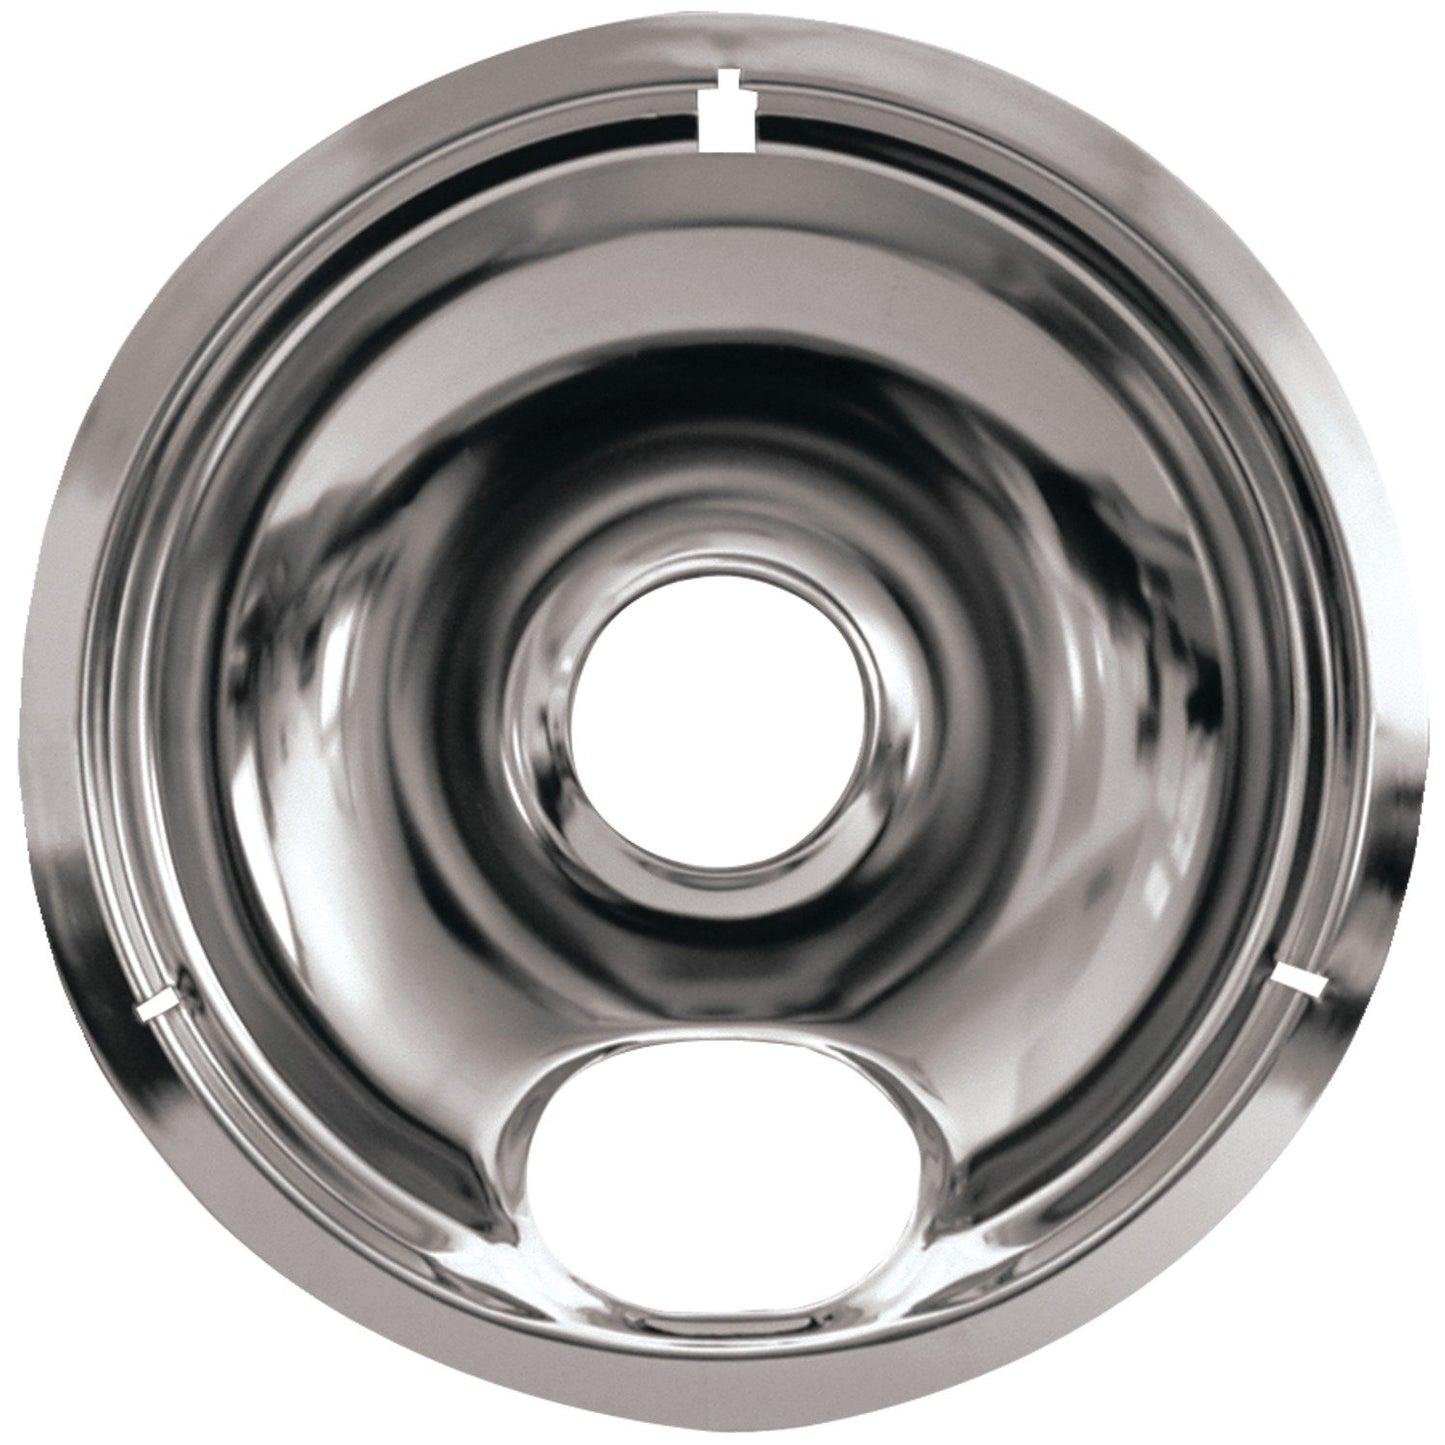 Stanco Metal Products 7008 Universal Chrome Drip Pan (8")